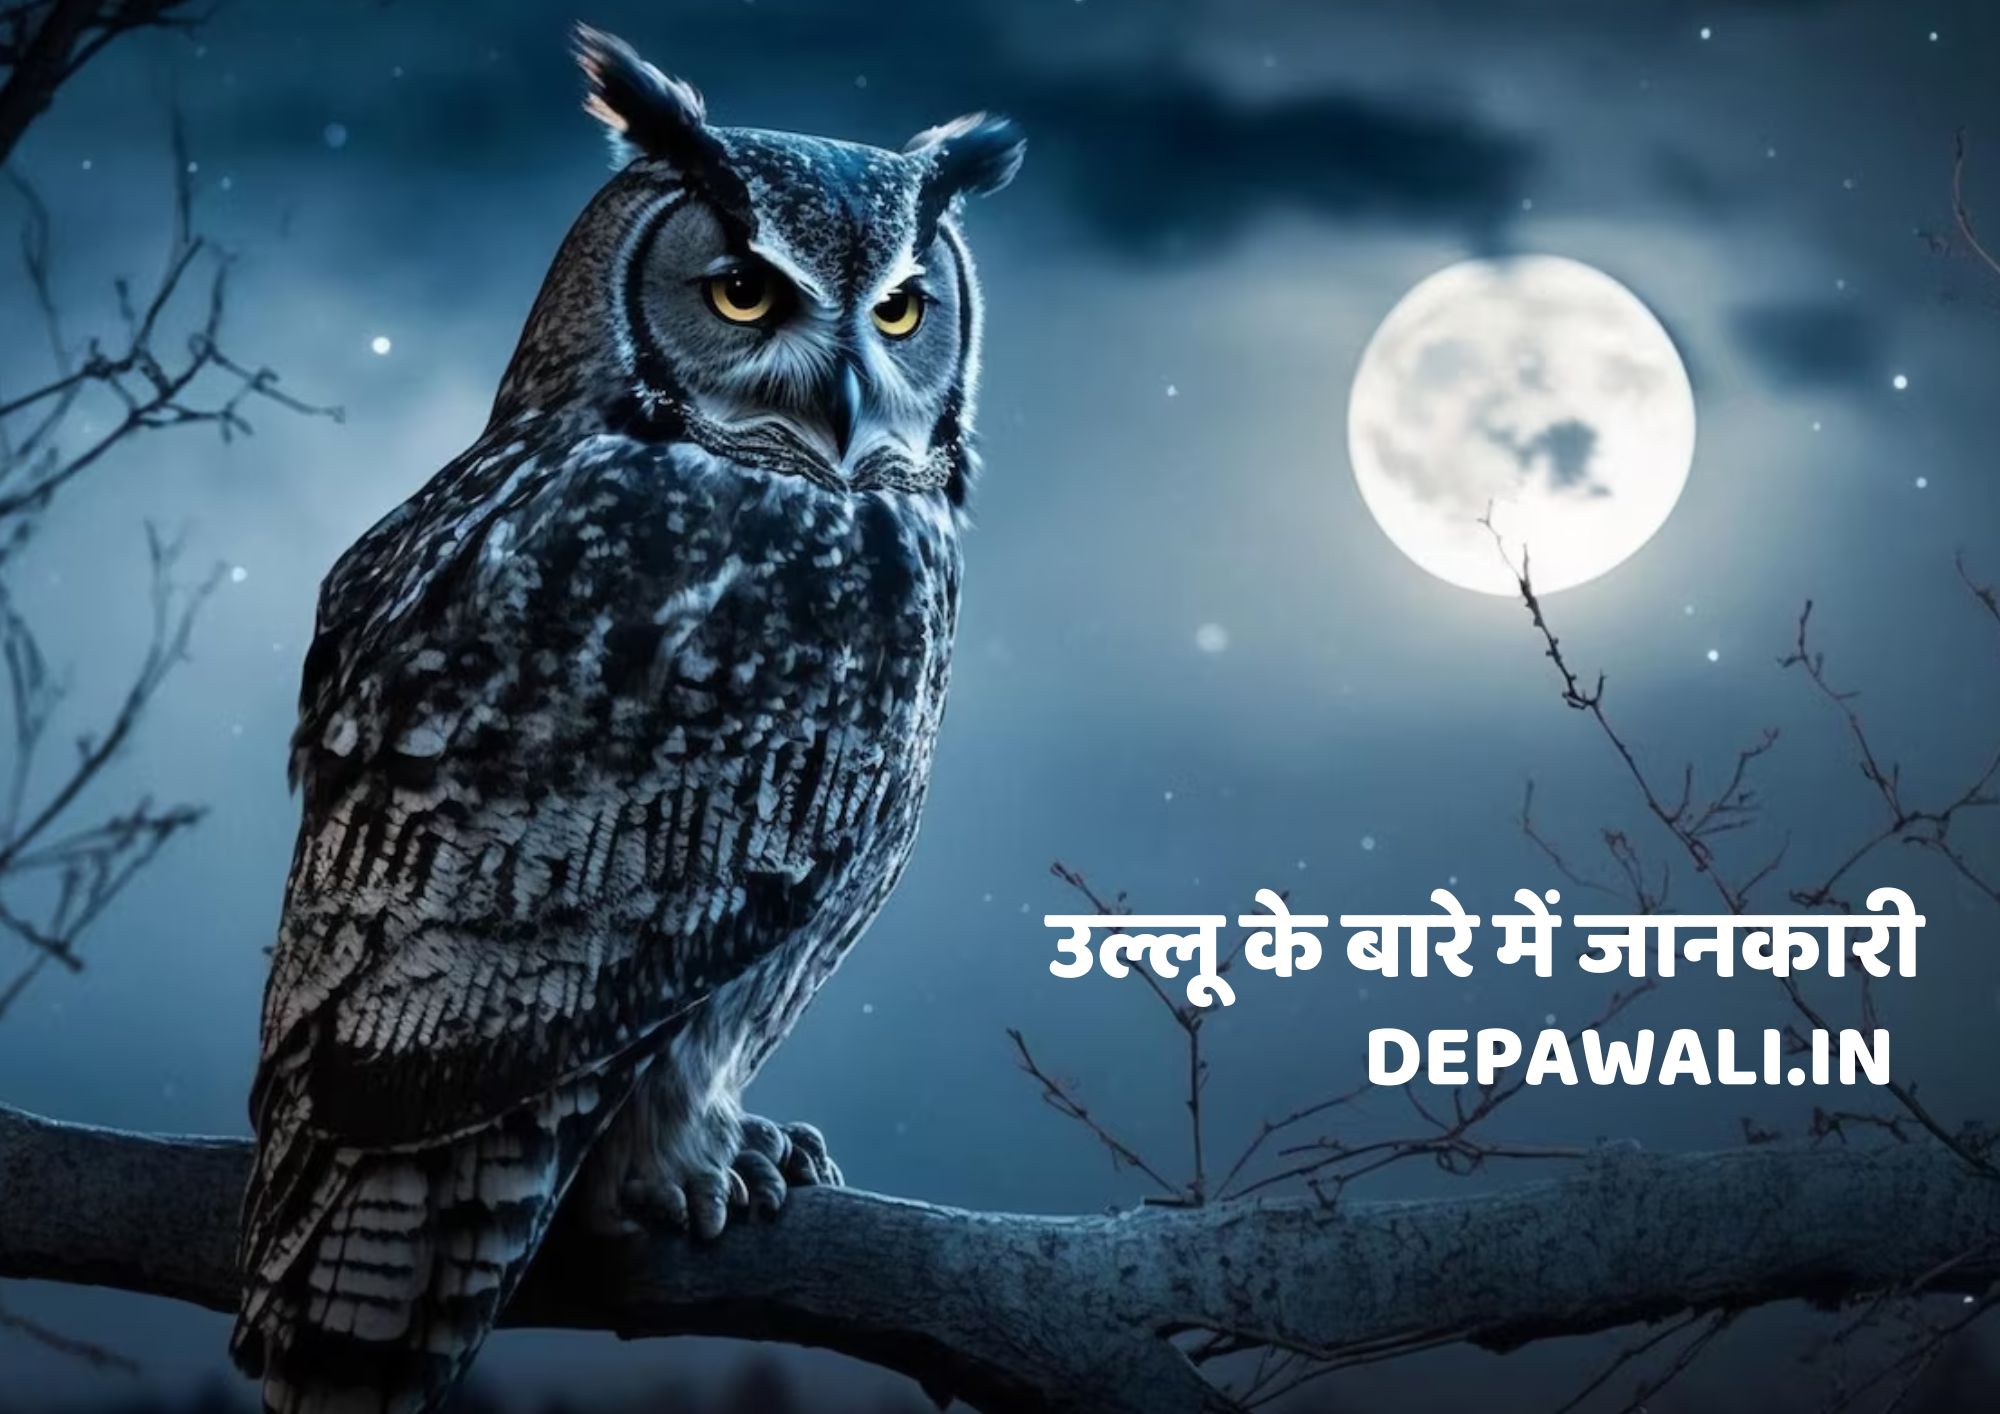 उल्लू के बारे में जानकारी (Ullu Ke Bare Me Jankari) - Facts About Owl In Hindi - Information About Owl In Hindi